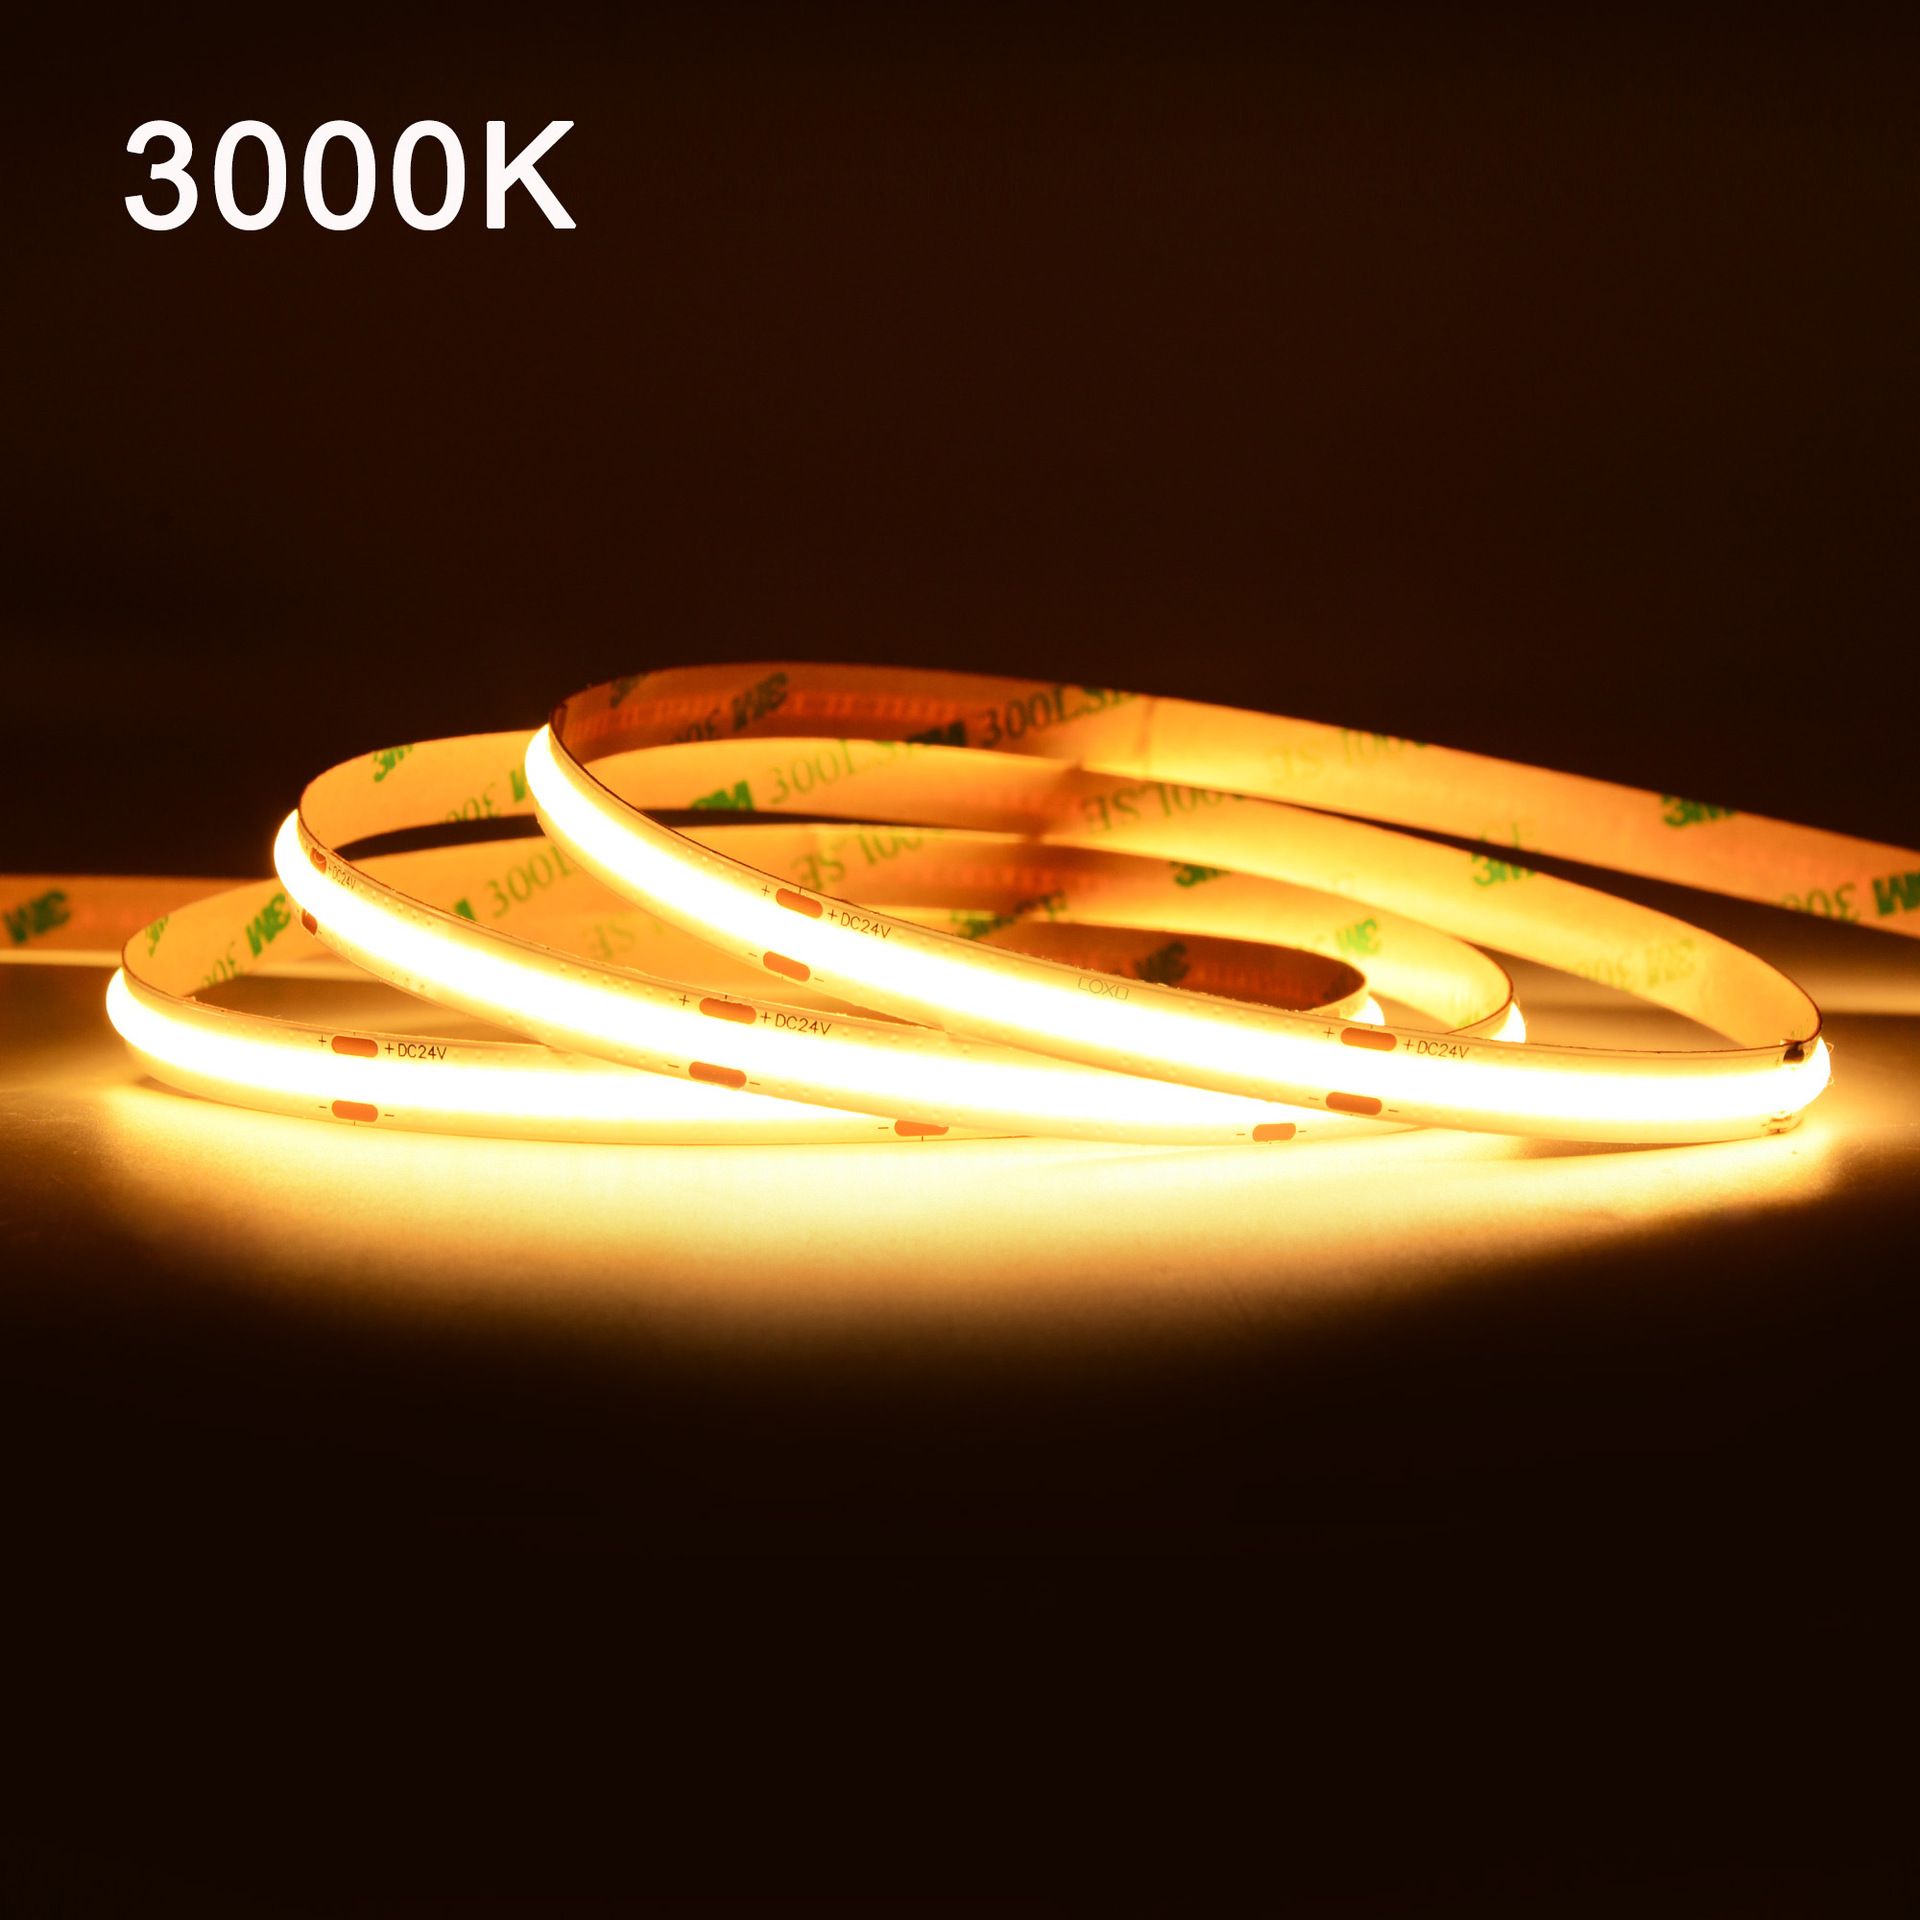 3000K (Warm White Light)